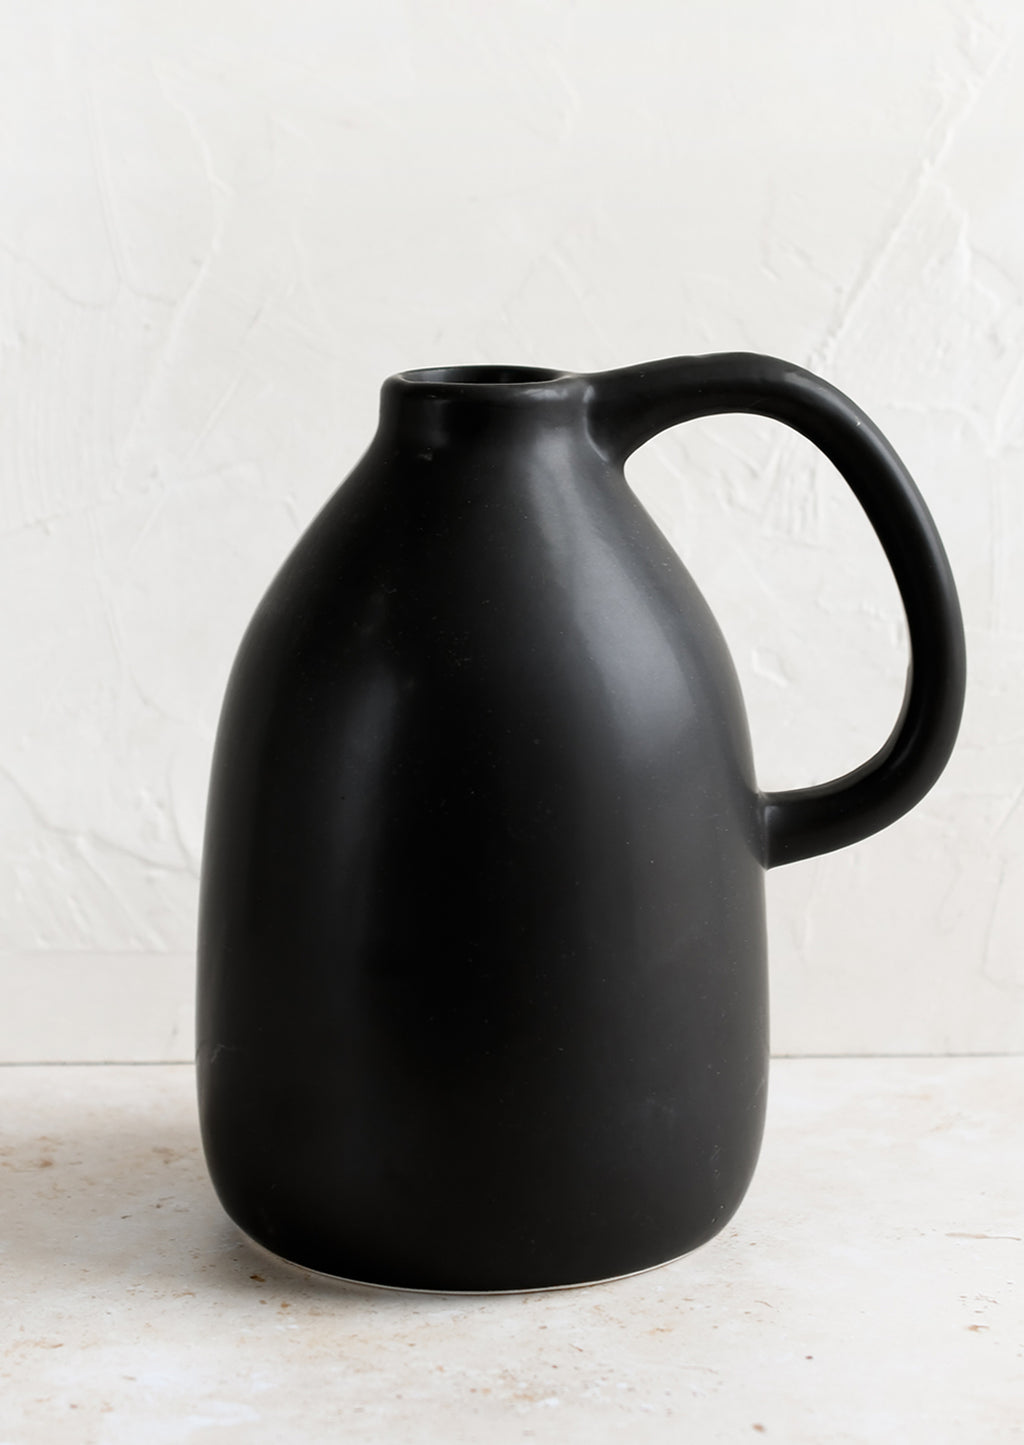 2: A black ceramic vase in jug shape with handle.